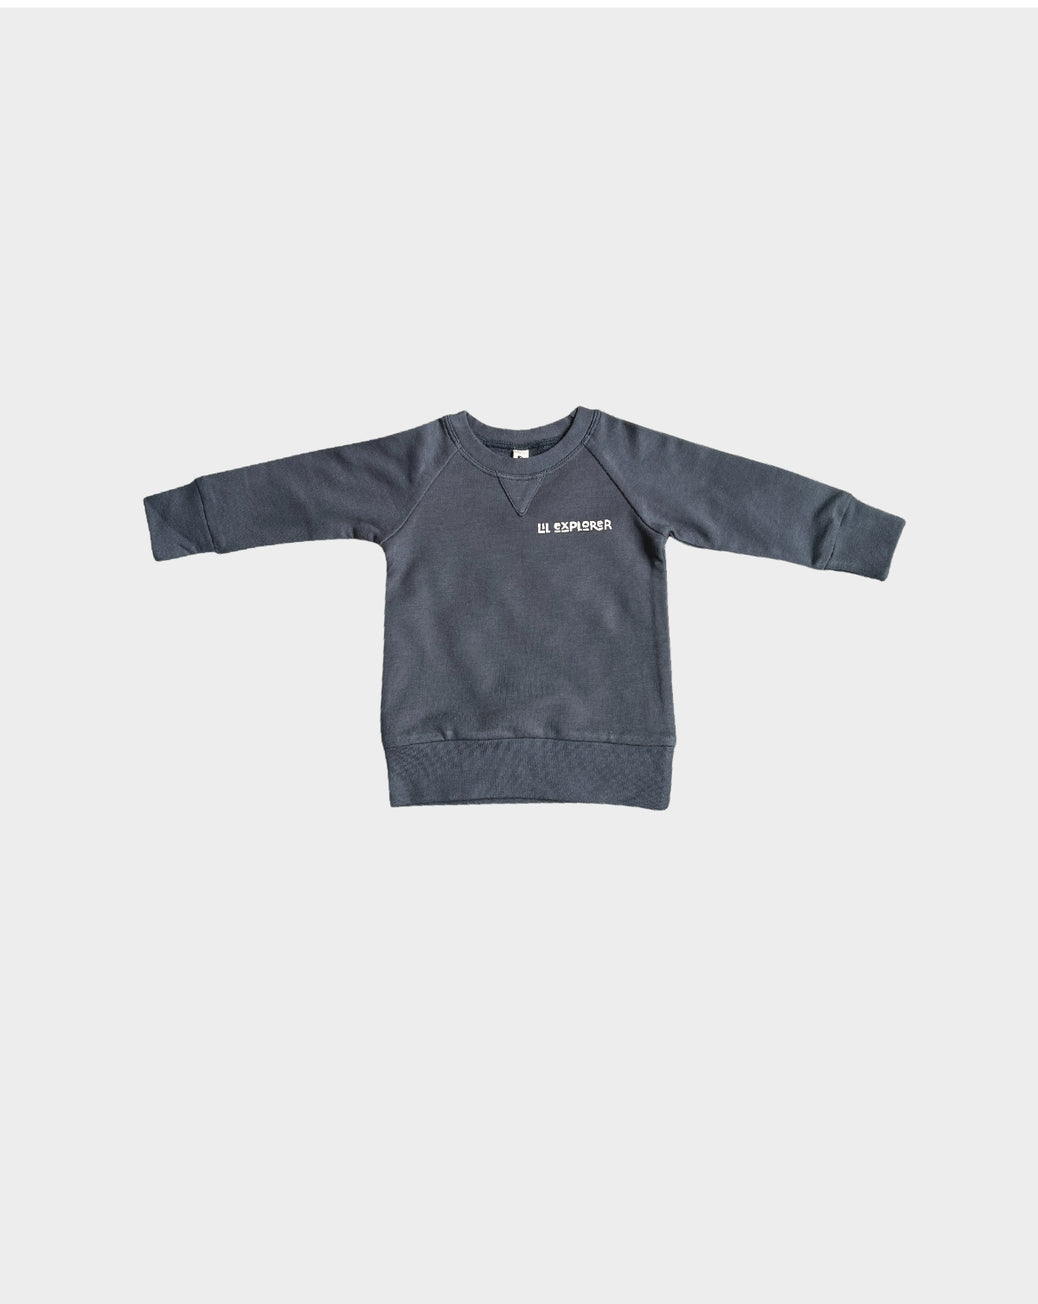 Kids Raglan Sweatshirt | Lil Explorer